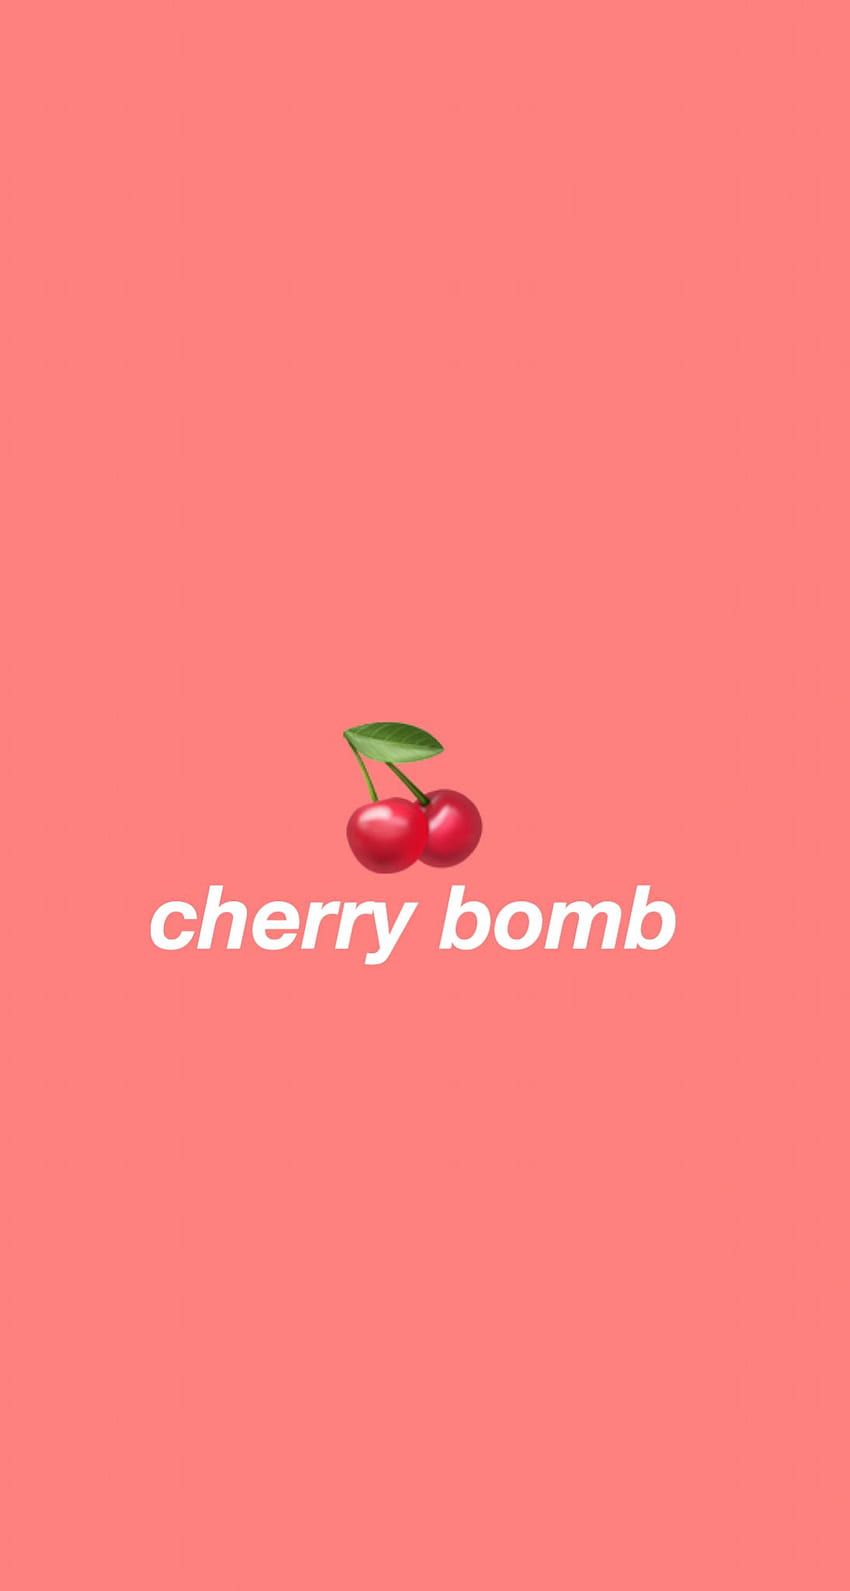 Cherry Bomb wallpaper I made for my phone! - Cherry